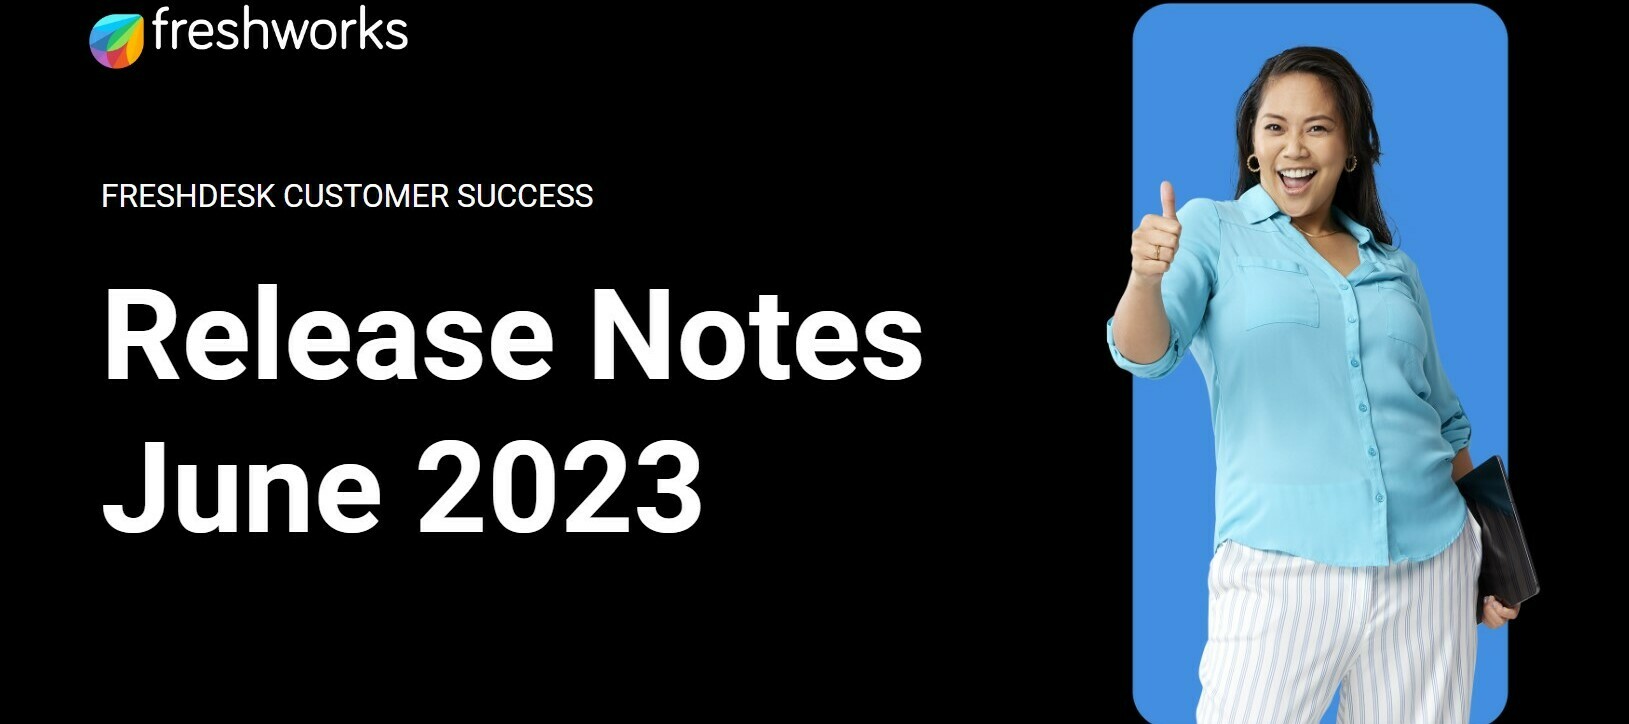 Freshdesk Customer Success Release Notes - June 2023